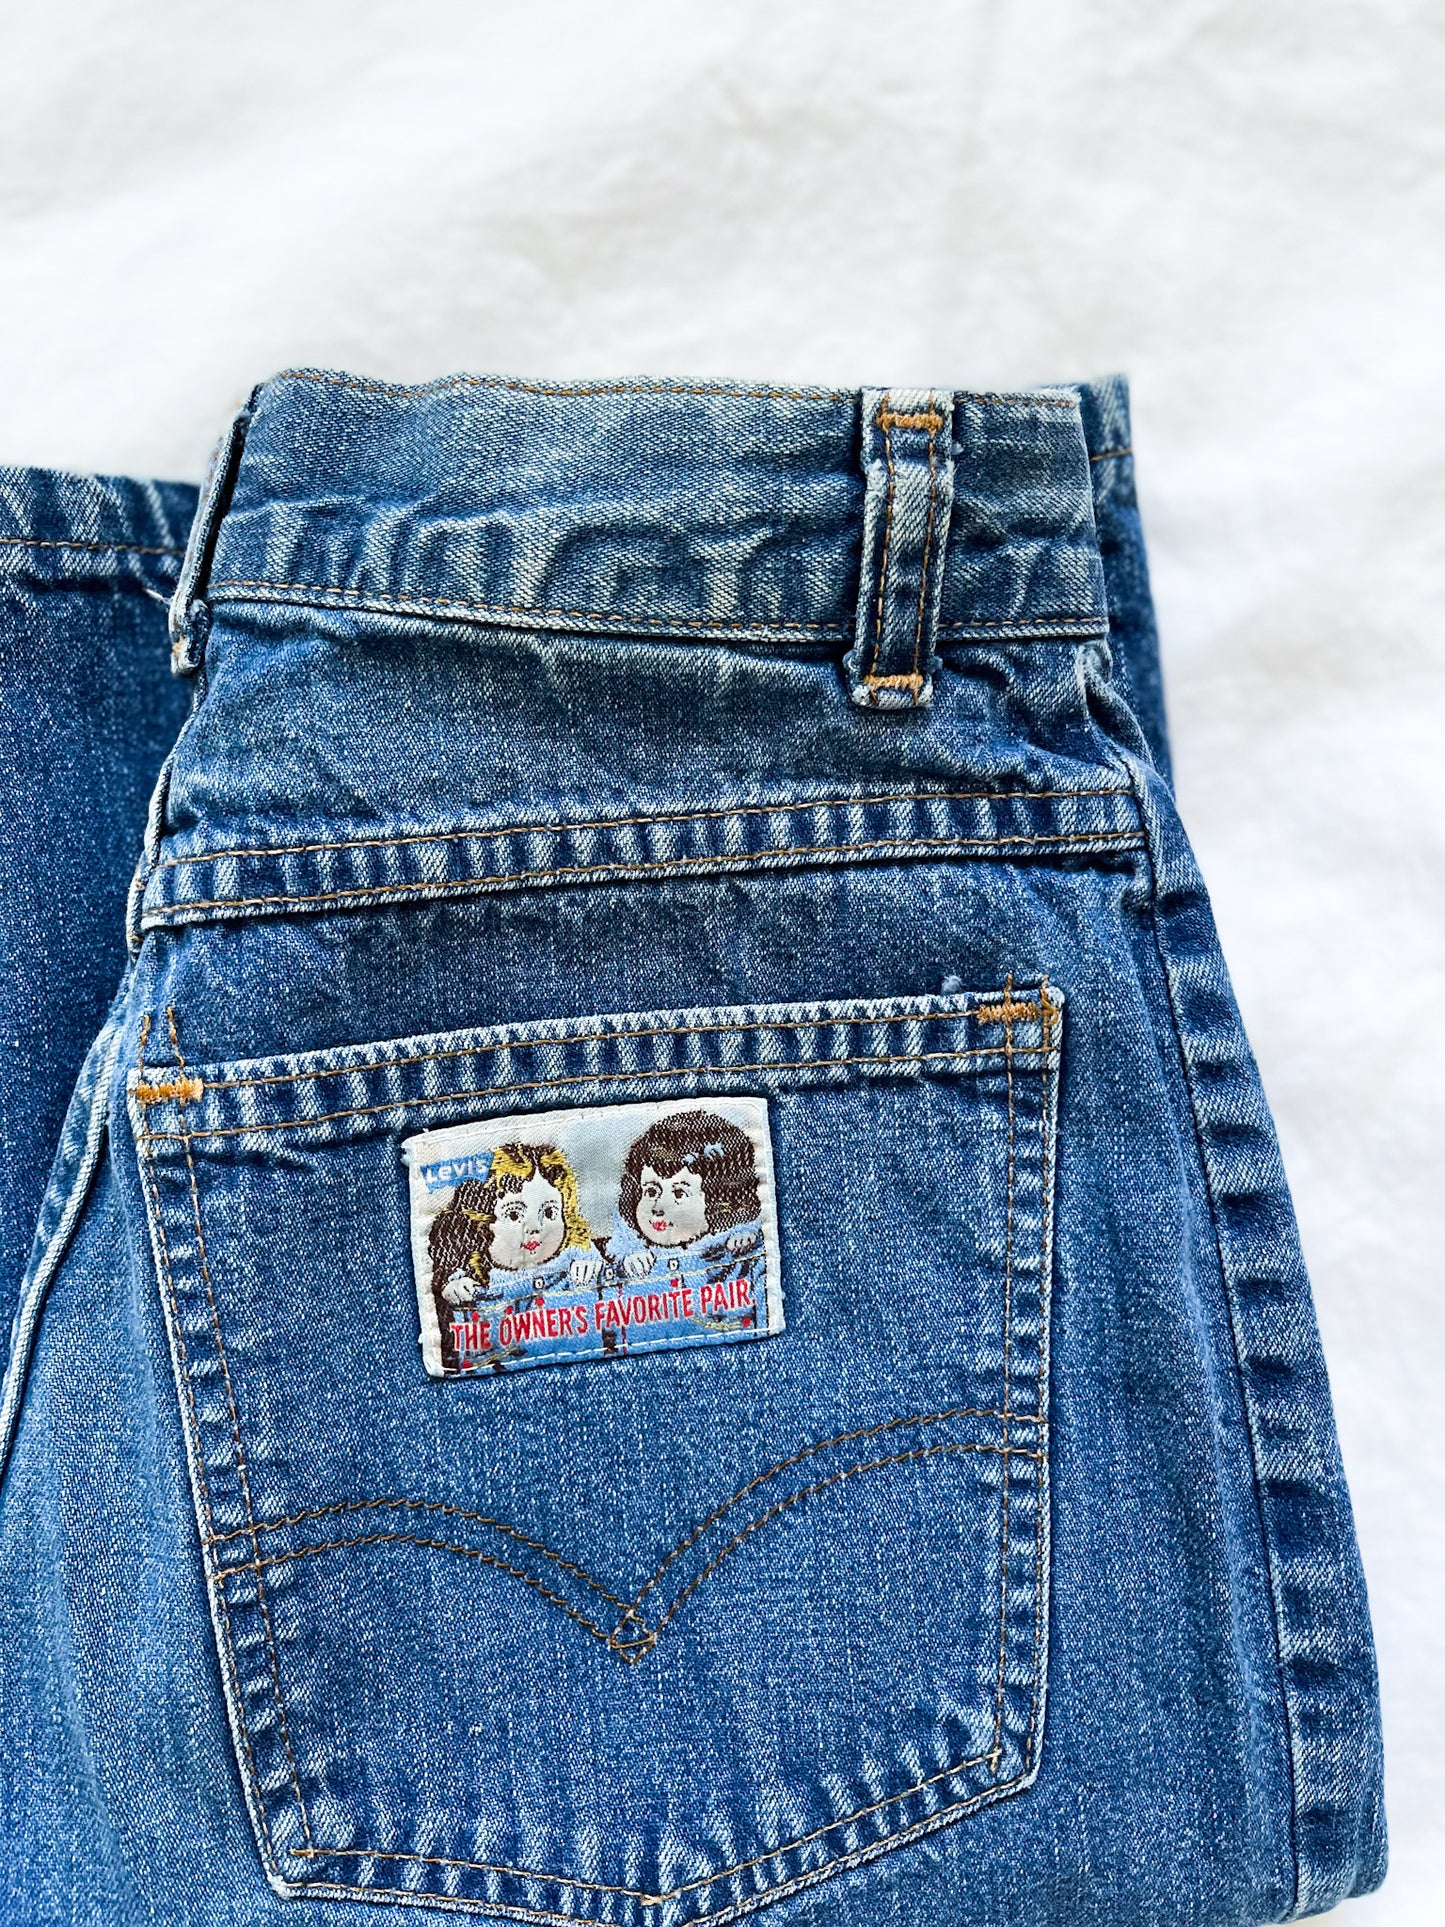 Vintage Levi's Owner's Favorite Pair Jeans - 25" Waist